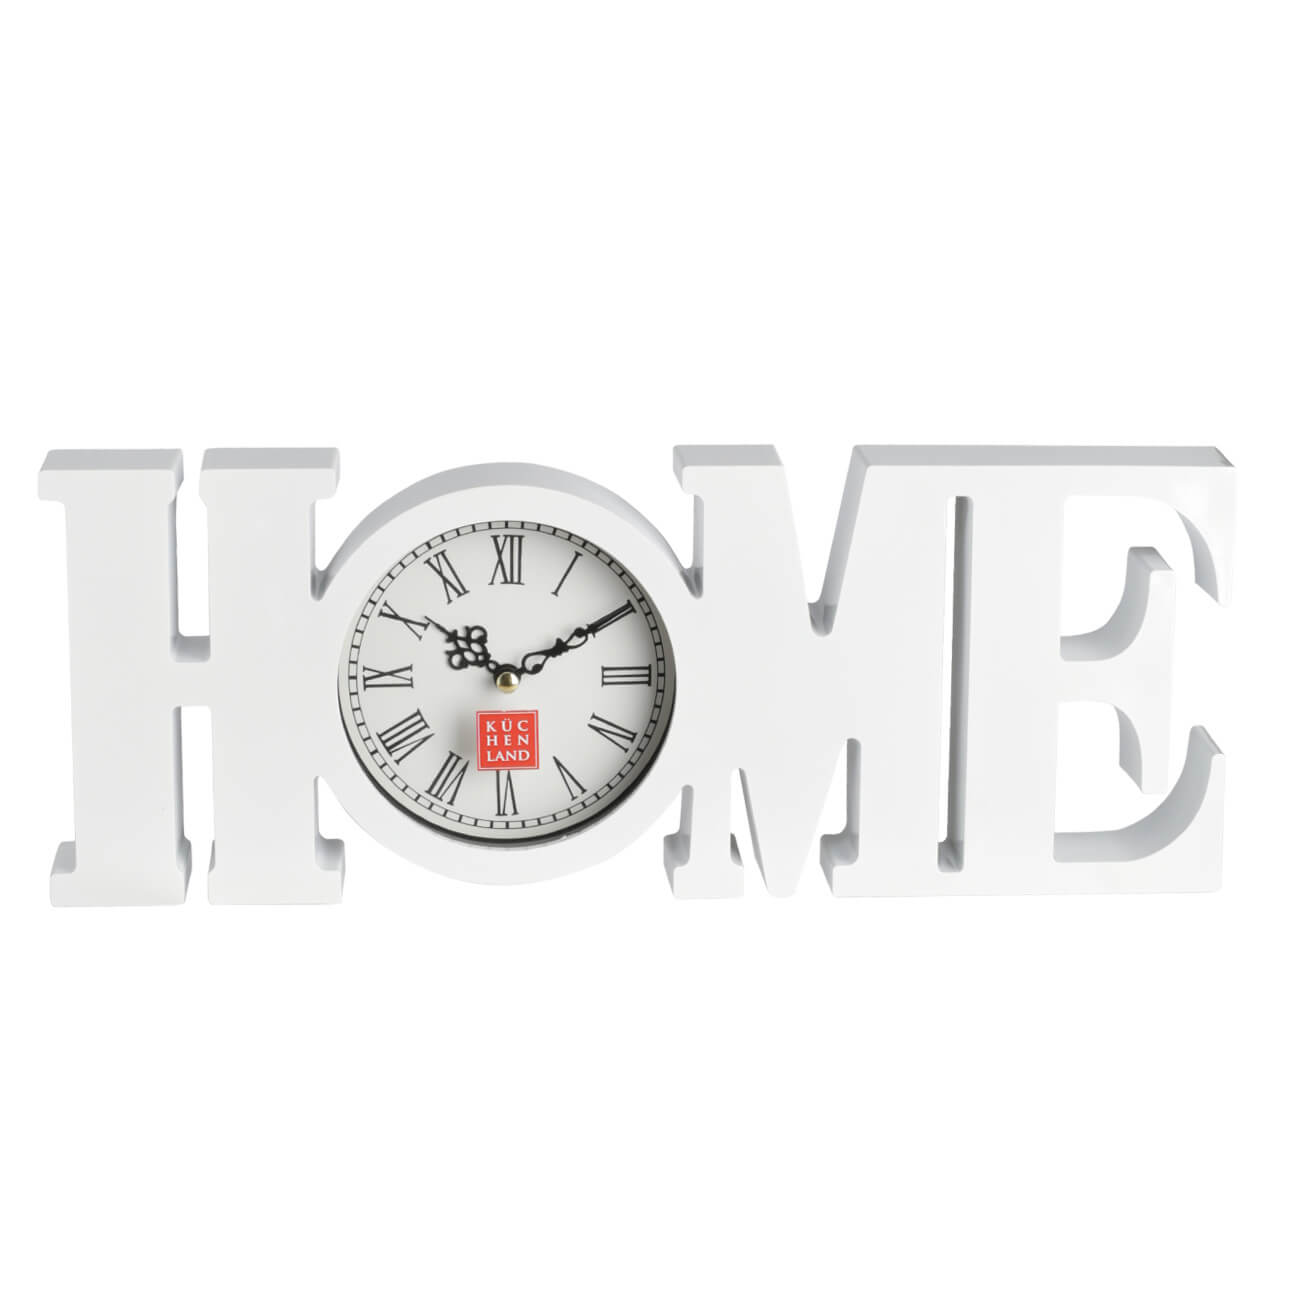 Часы настенные, 39х15 см, пластик/стекло, белые, Ноmе, Home deco настенные часы centek